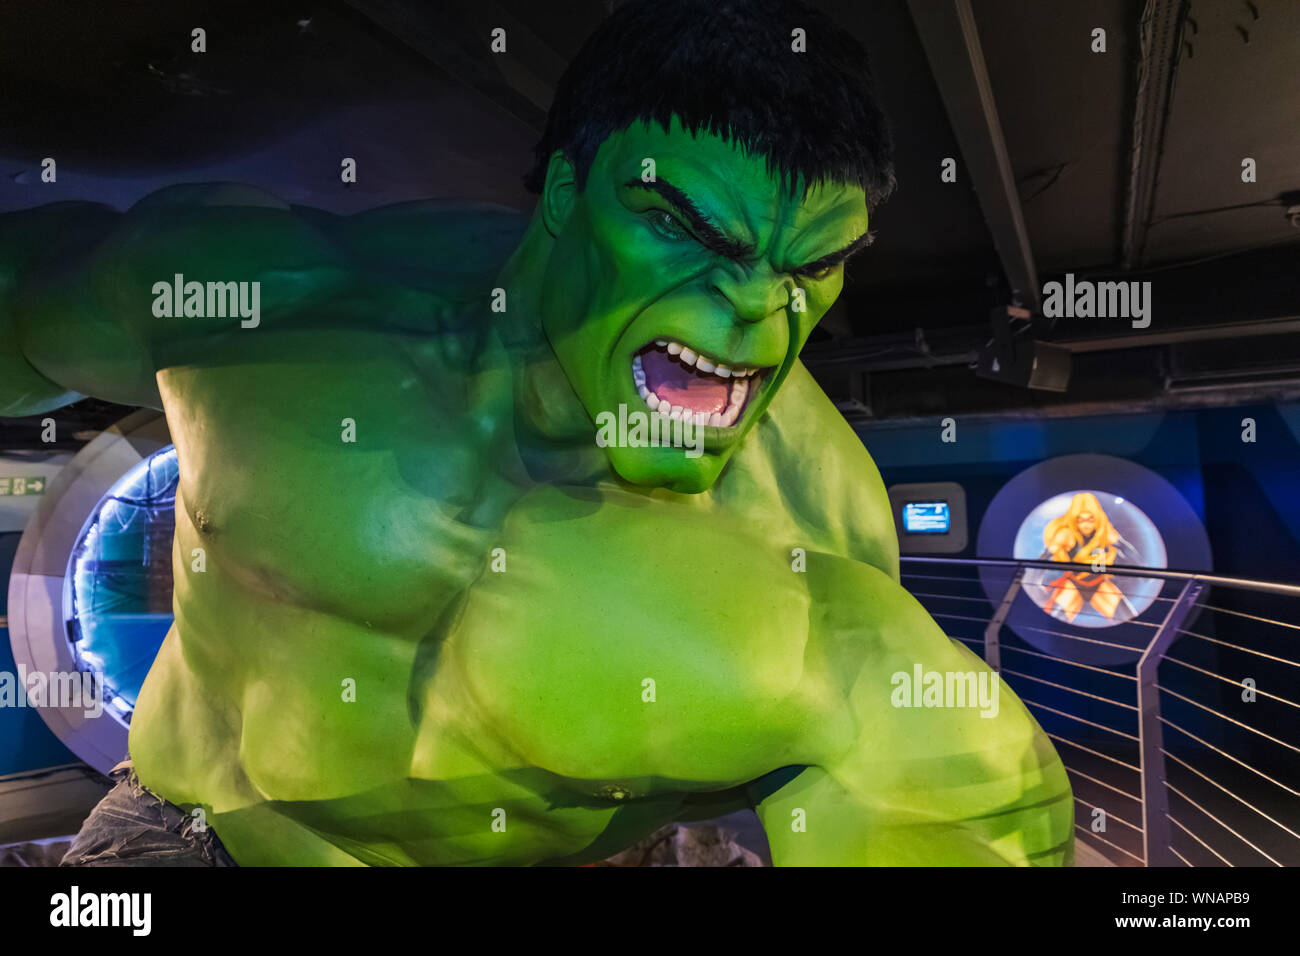 England, London, Marylebone, Interior View of Madam Tussauds, Giant Waxwork Figure of The Incredible Hulk Stock Photo